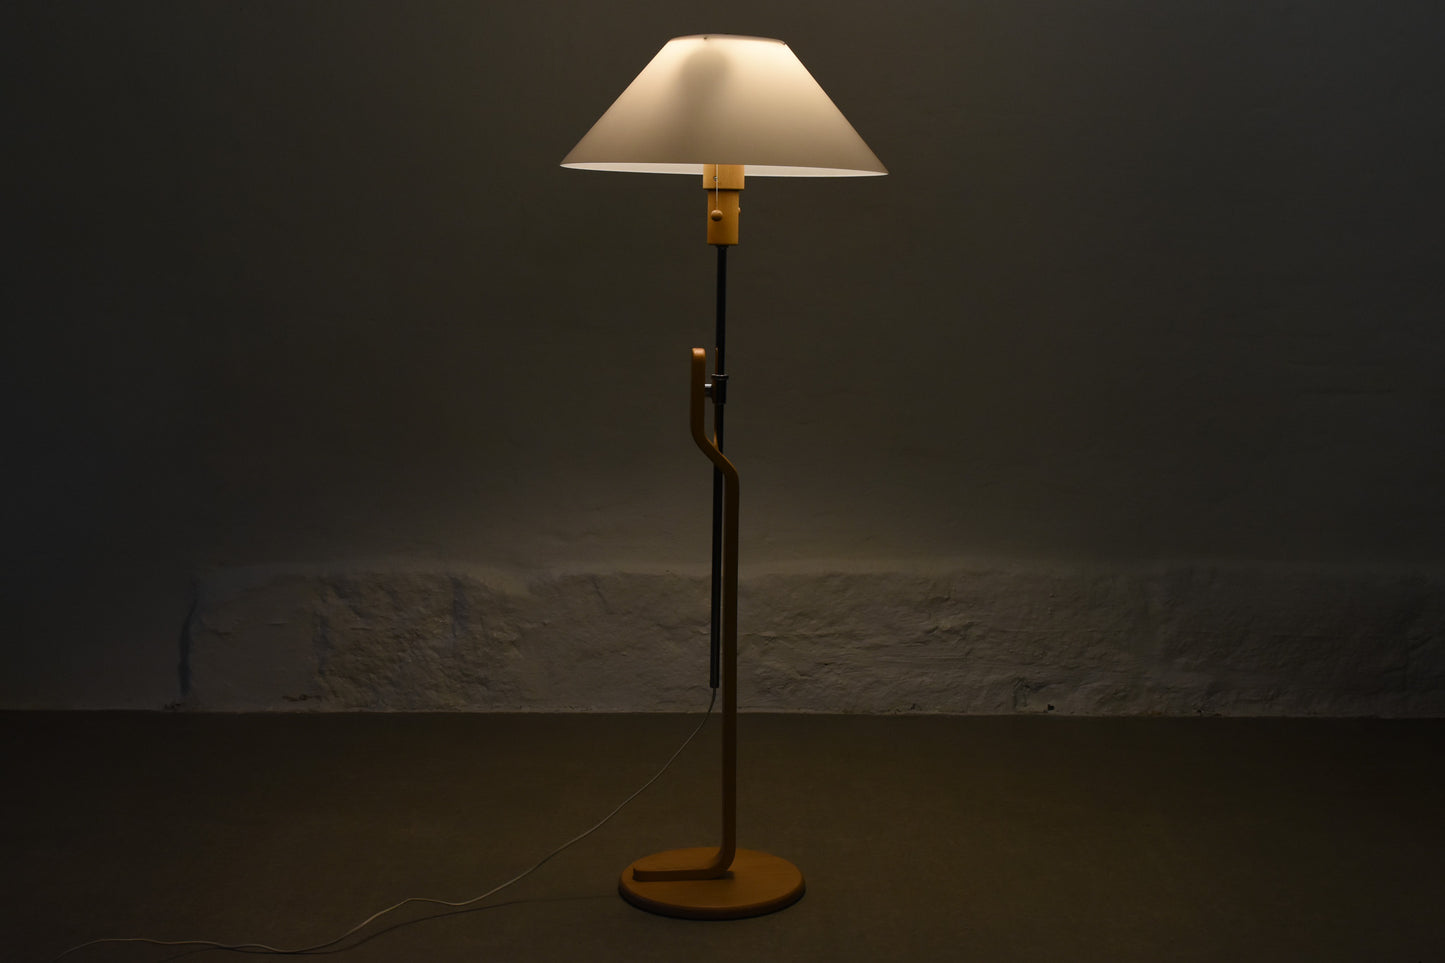 Beech + acrylic floor lamp by Ateljé Lyktan